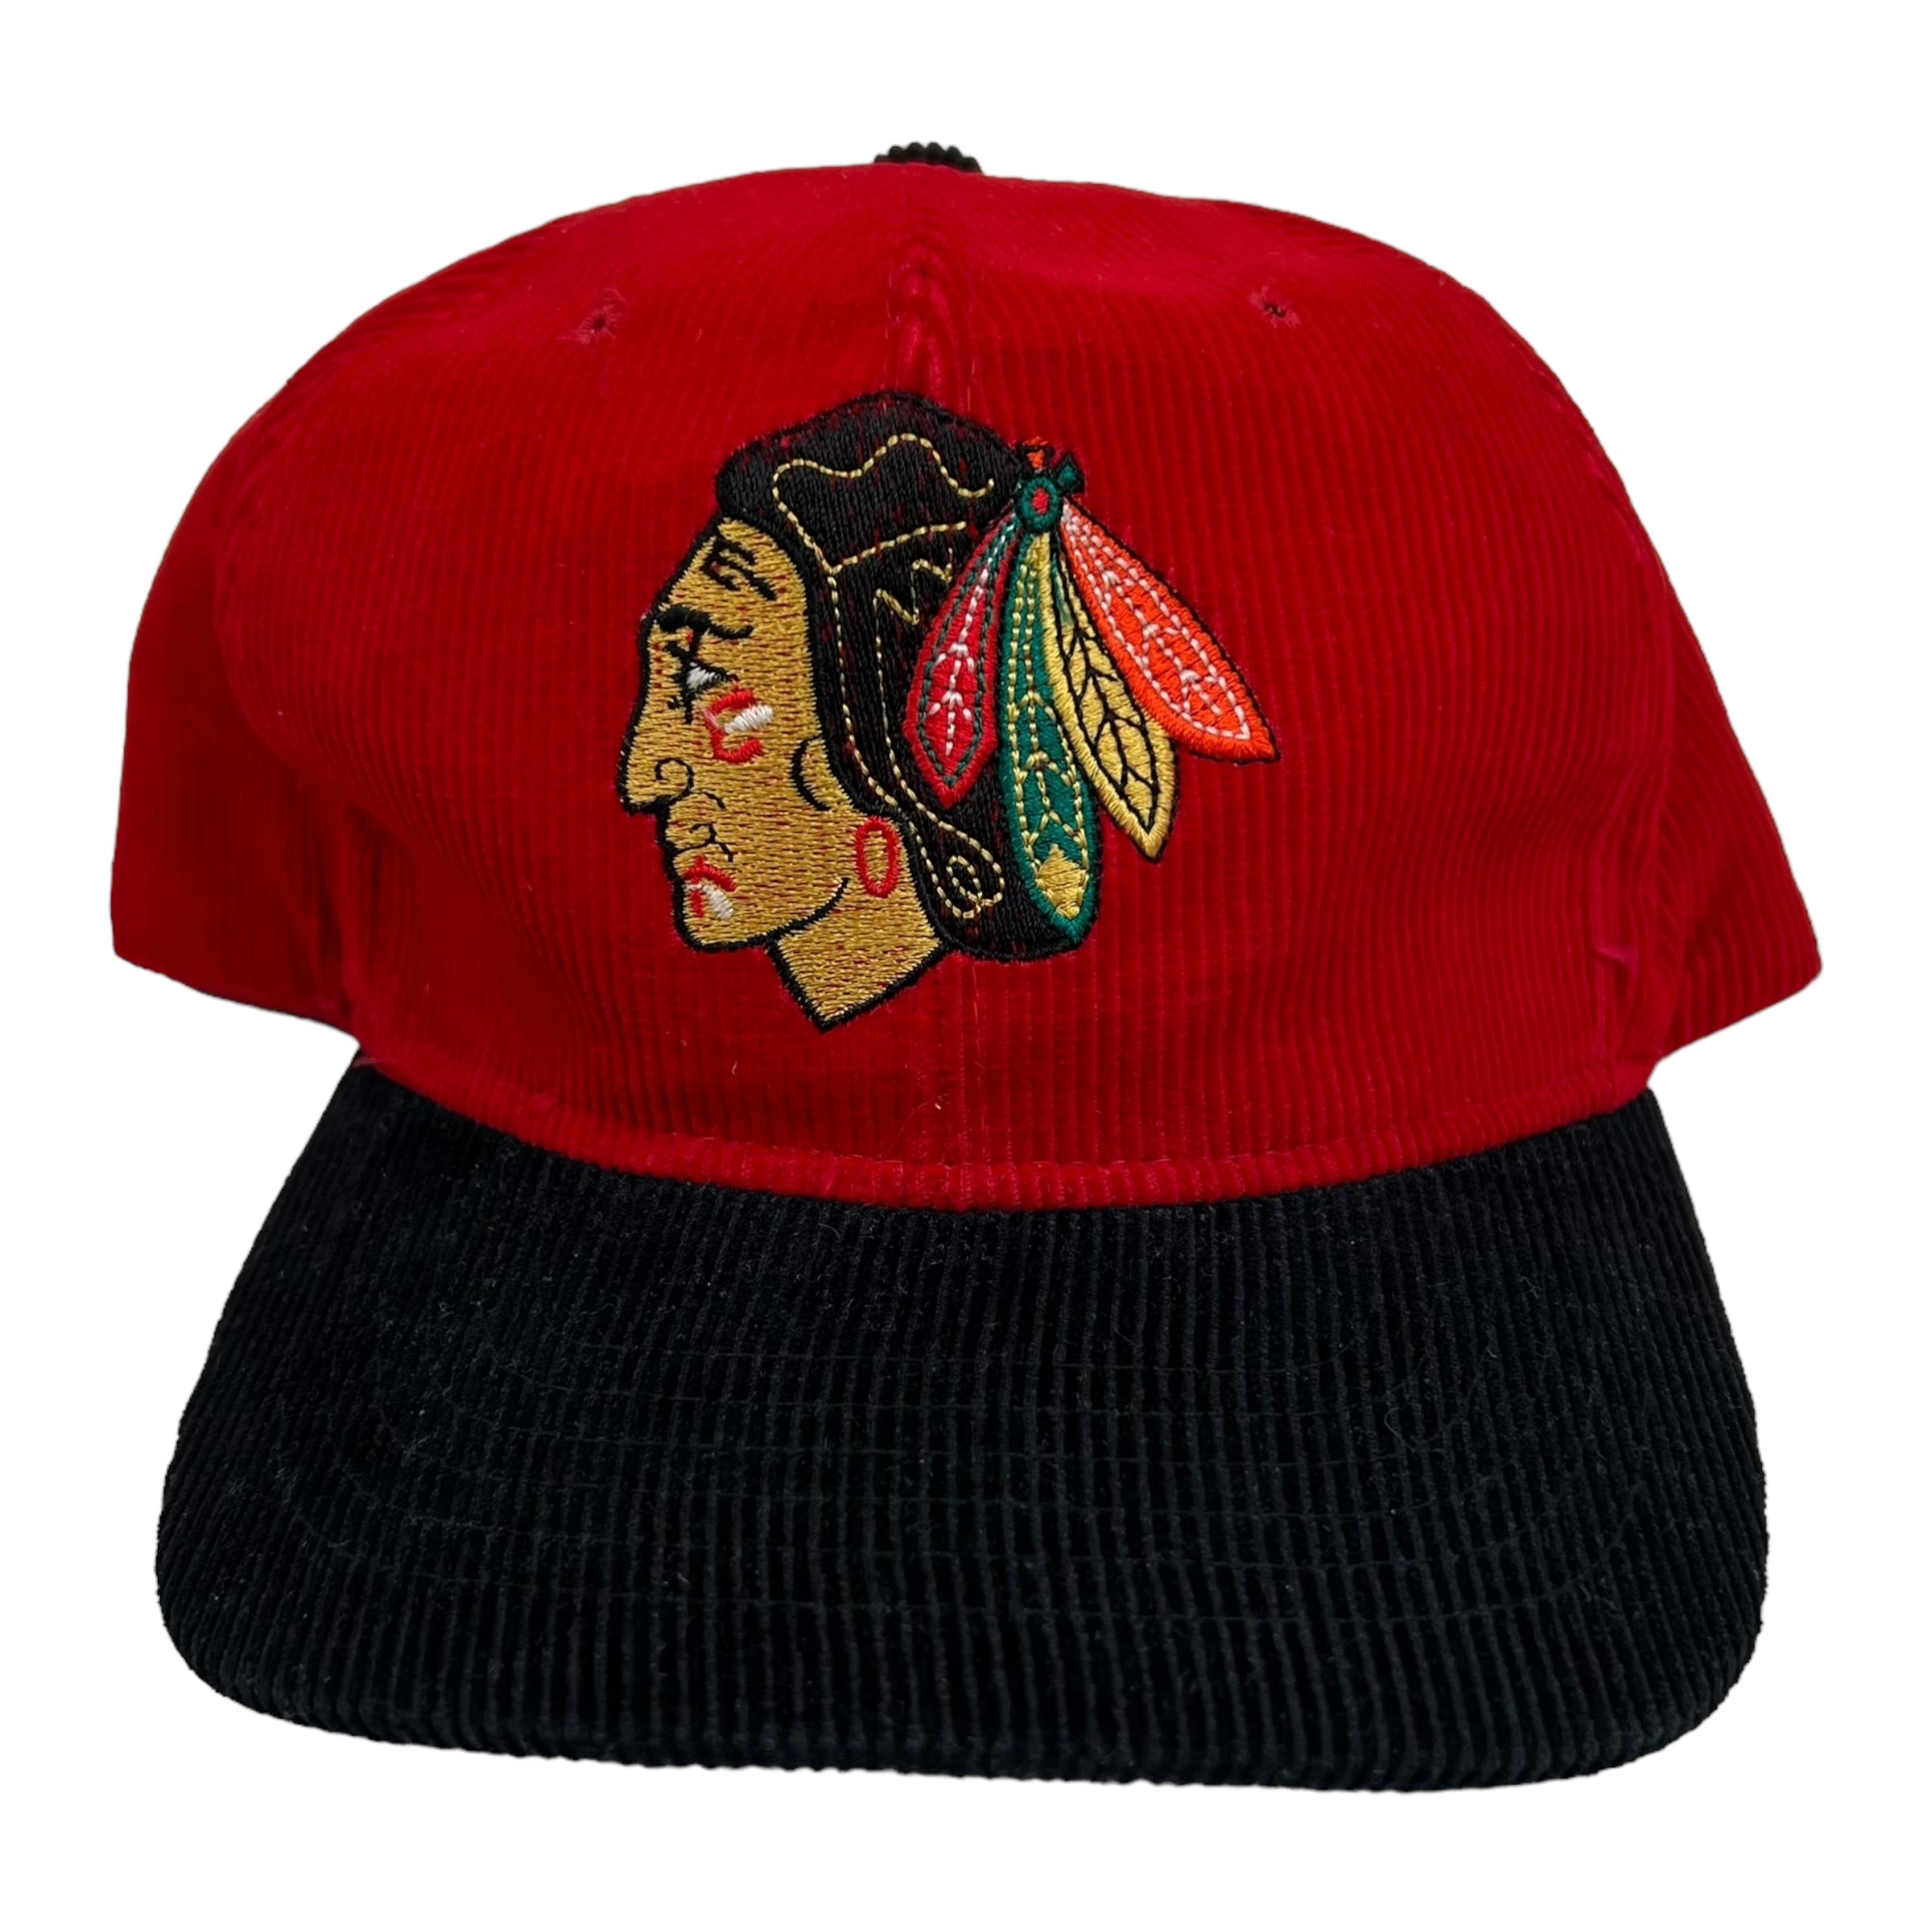 Vintage Chicago Blackhawks Hat - Red Hockey Cap